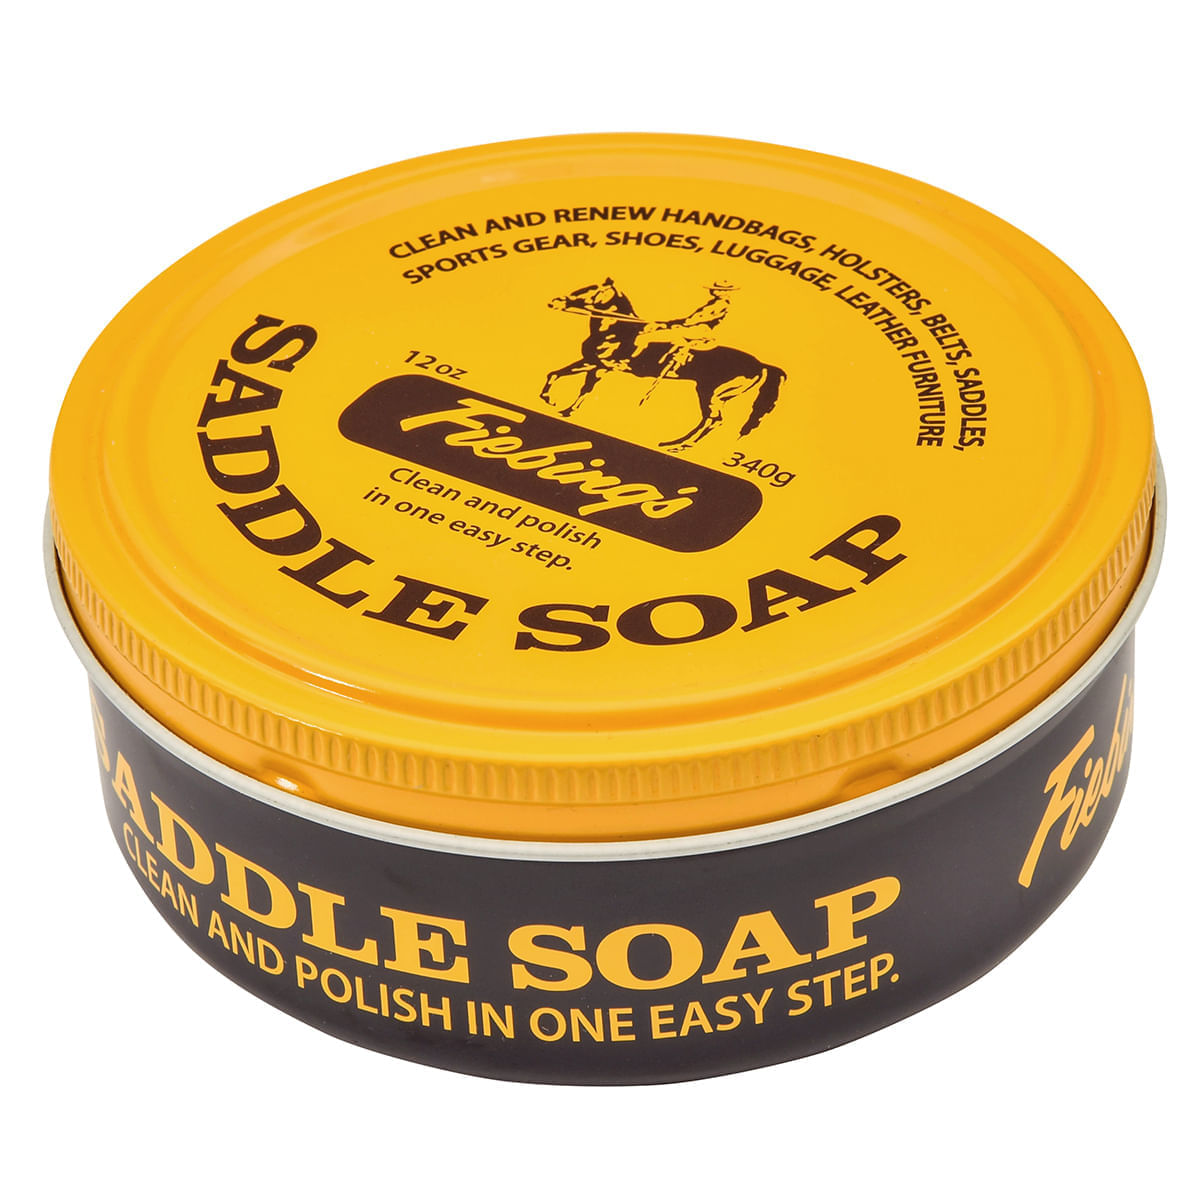 Saddle Soap/Can Fiebings/12 oz.